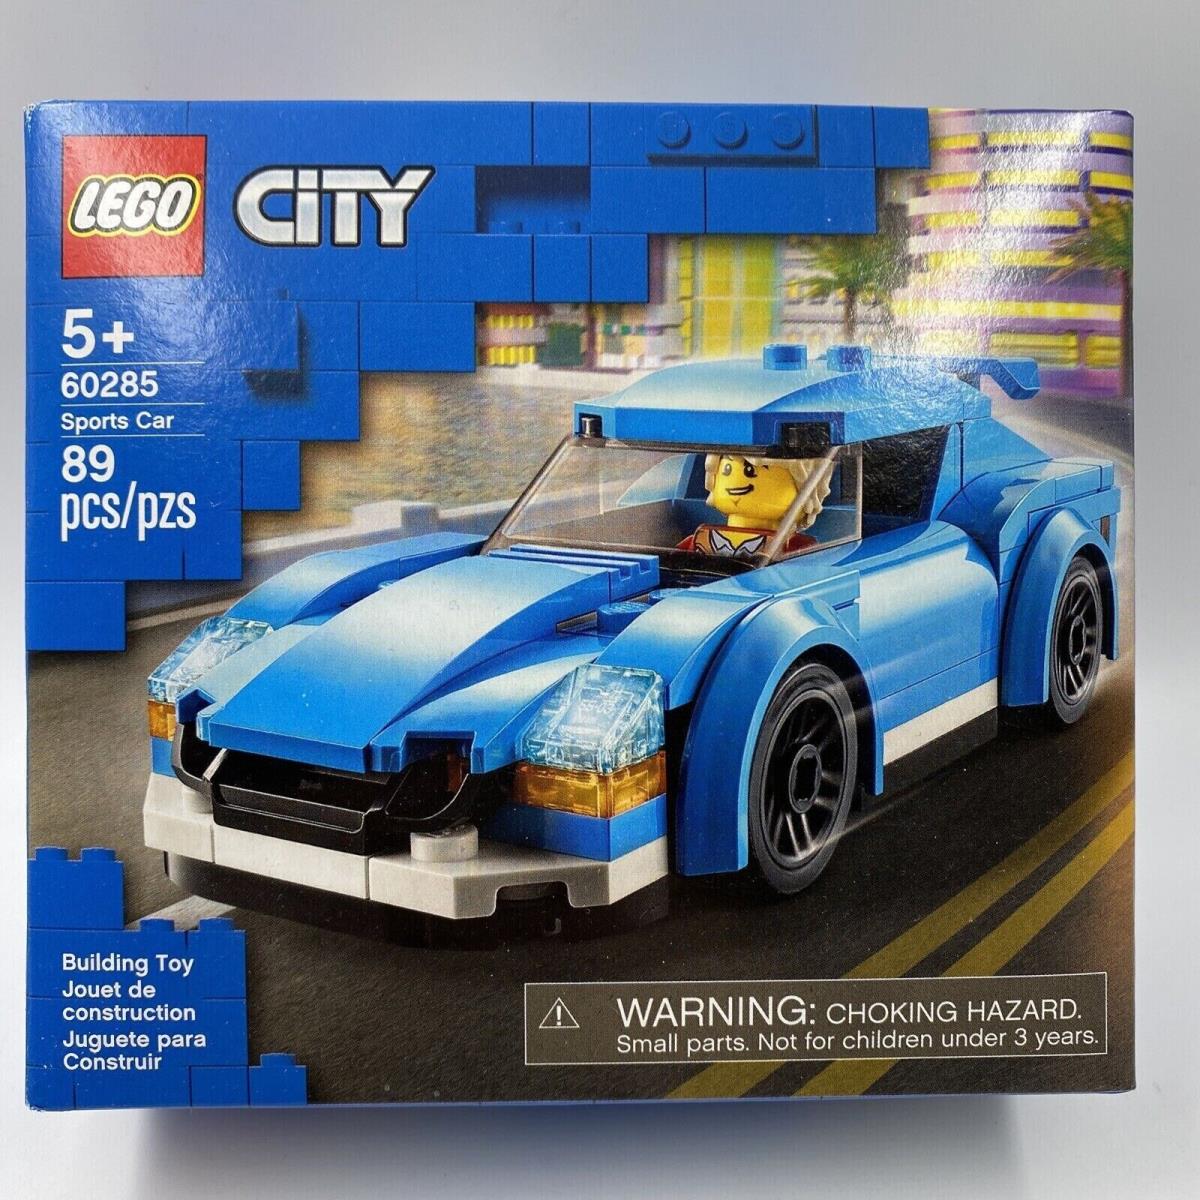 Lego City: Sports Car 60285 Building Kit 89 Pcs